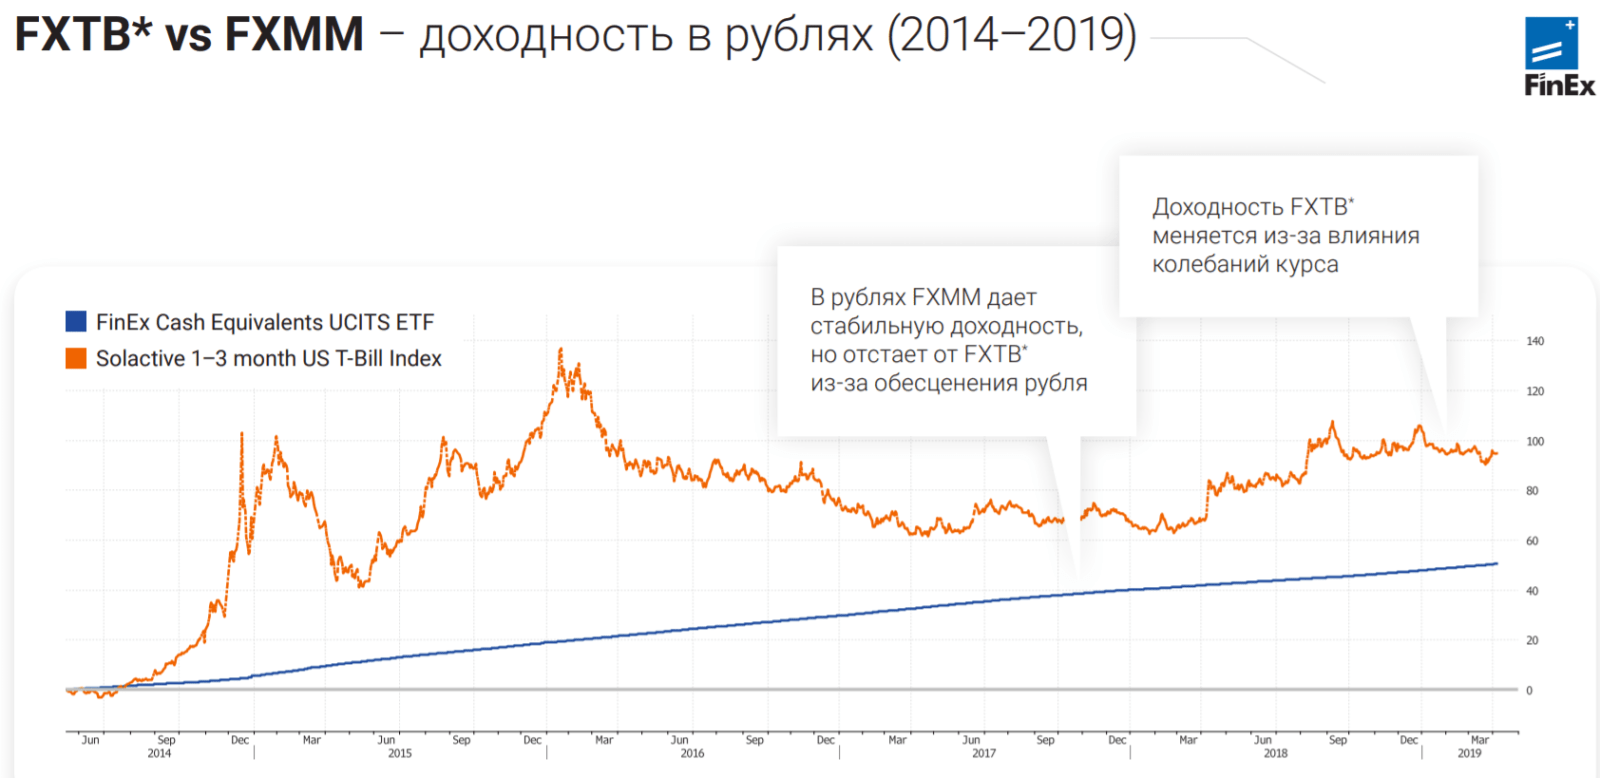 FXMM и FXTB - график рублевой доходности